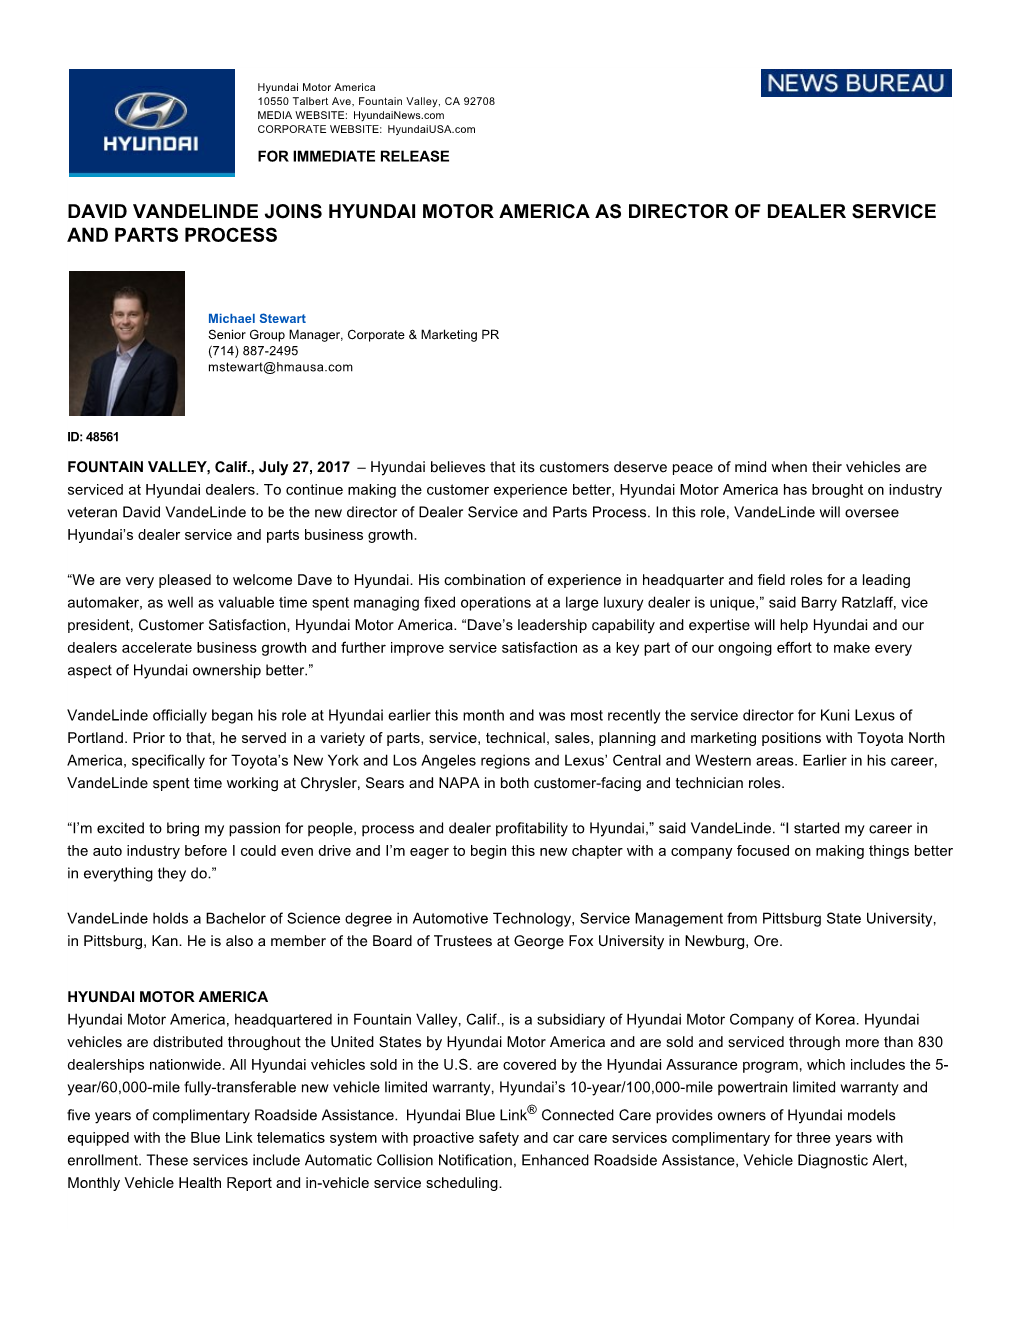 David Vandelinde Joins Hyundai Motor America As Director of Dealer Service and Parts Process